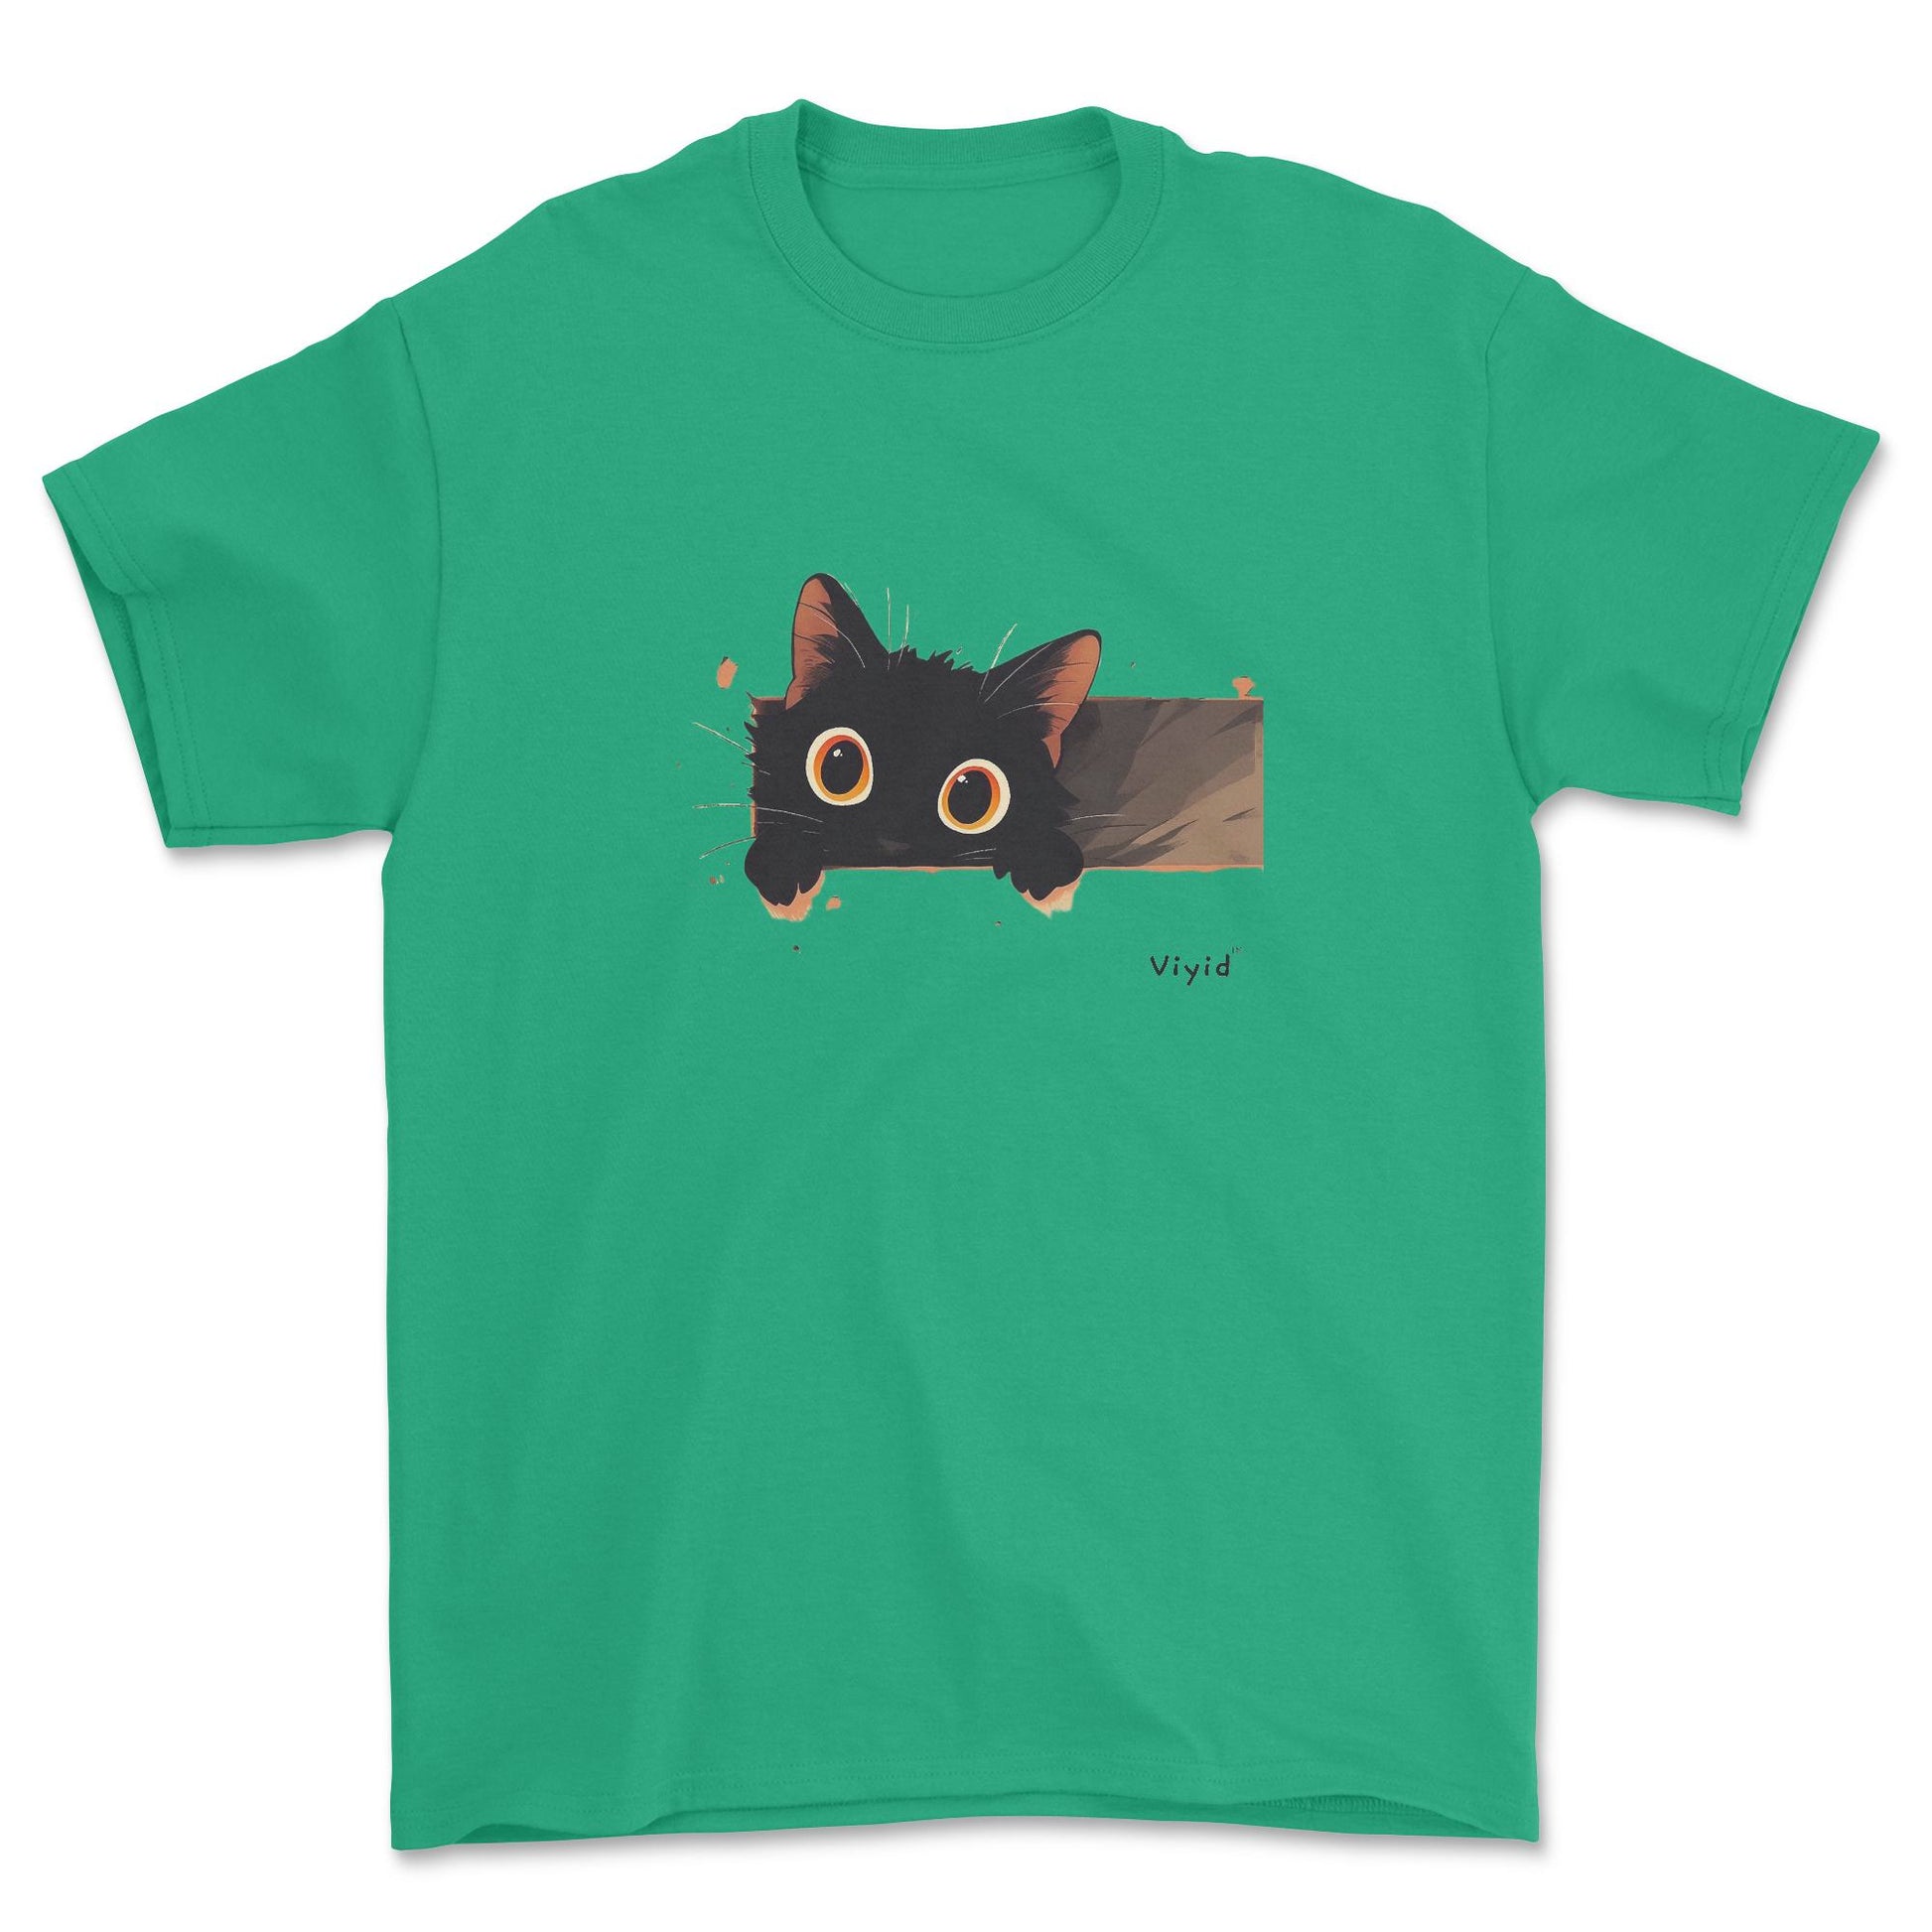 Peeping black cat adult t-shirt irish green.